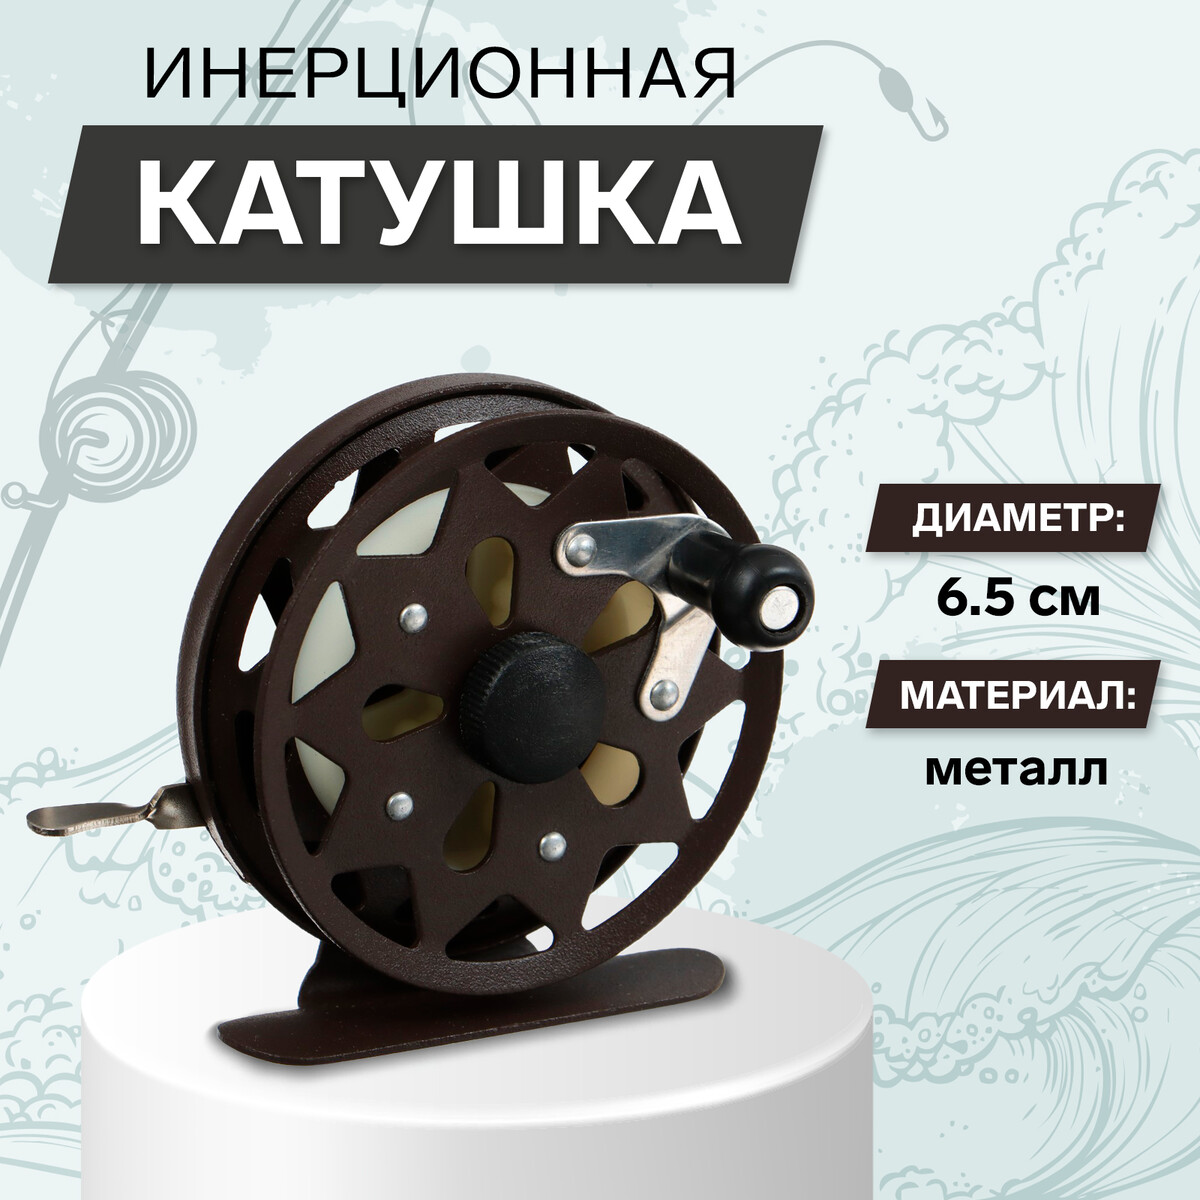 Катушка инерционная, металл, диаметр 6.5 см, цвет темно-коричневый,tl65 No brand